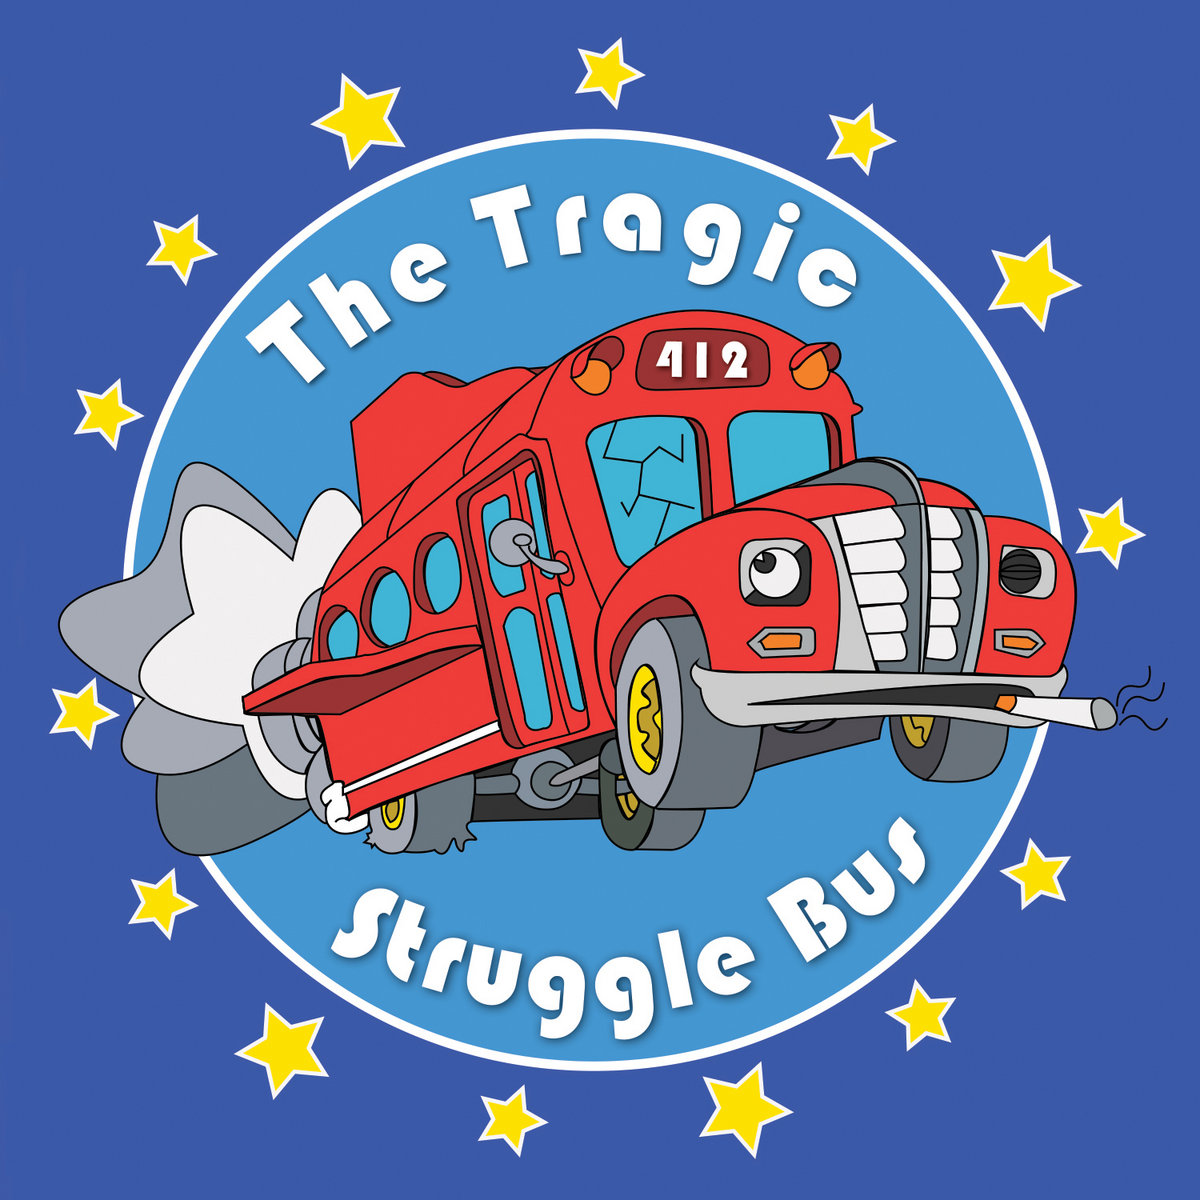 The Struggle Bus